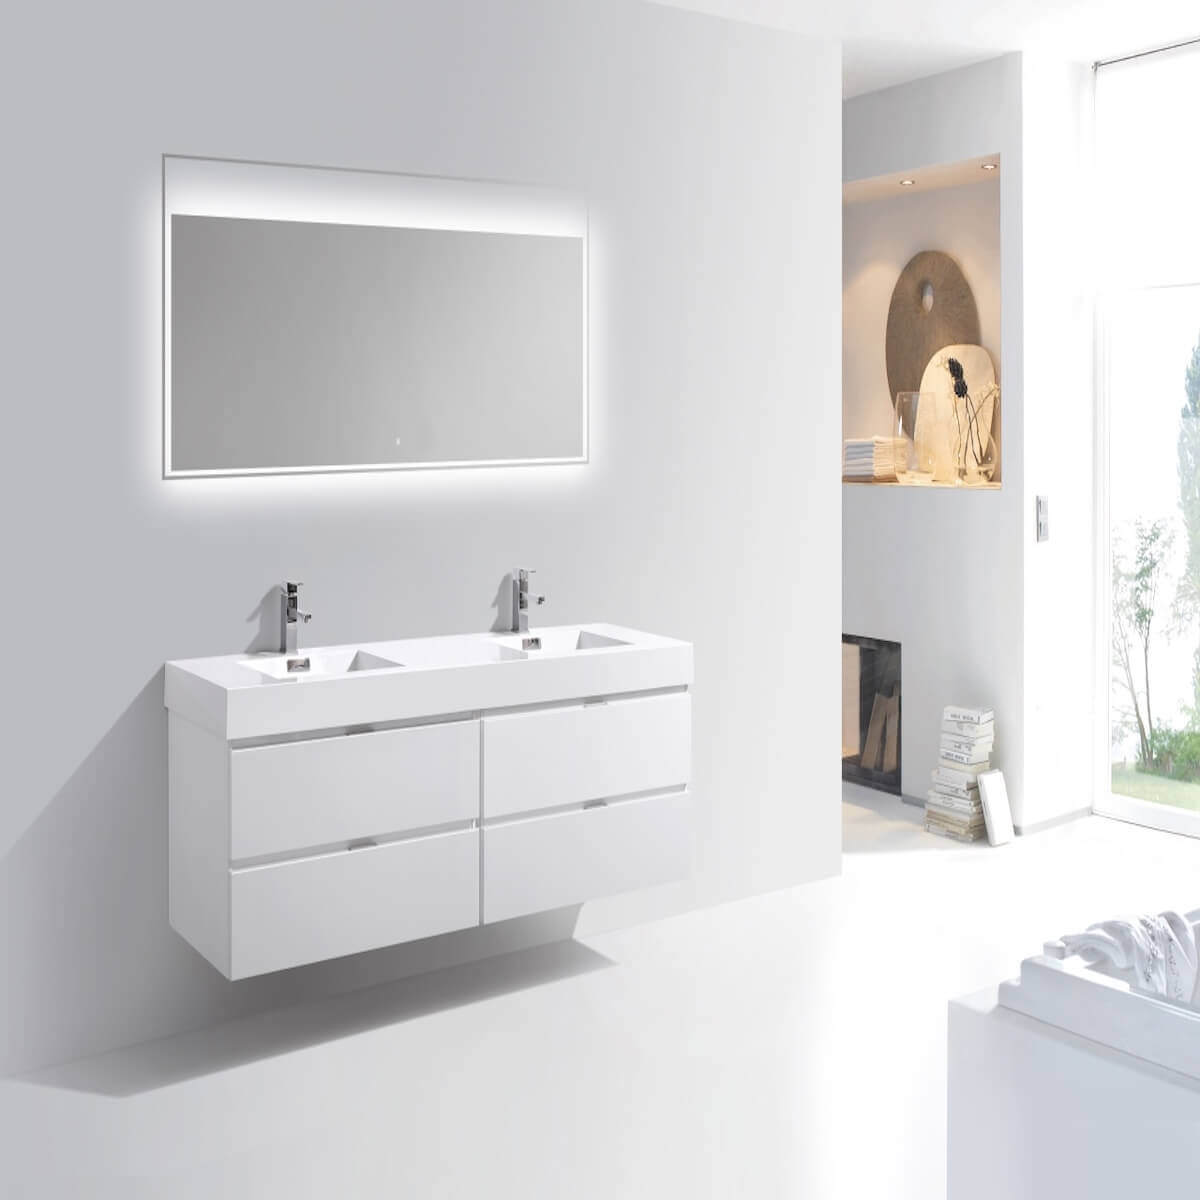 KubeBath Bliss 80" Gloss White Wall Mount Double Vanity BSL80-GW in Bathroom #finish_gloss white